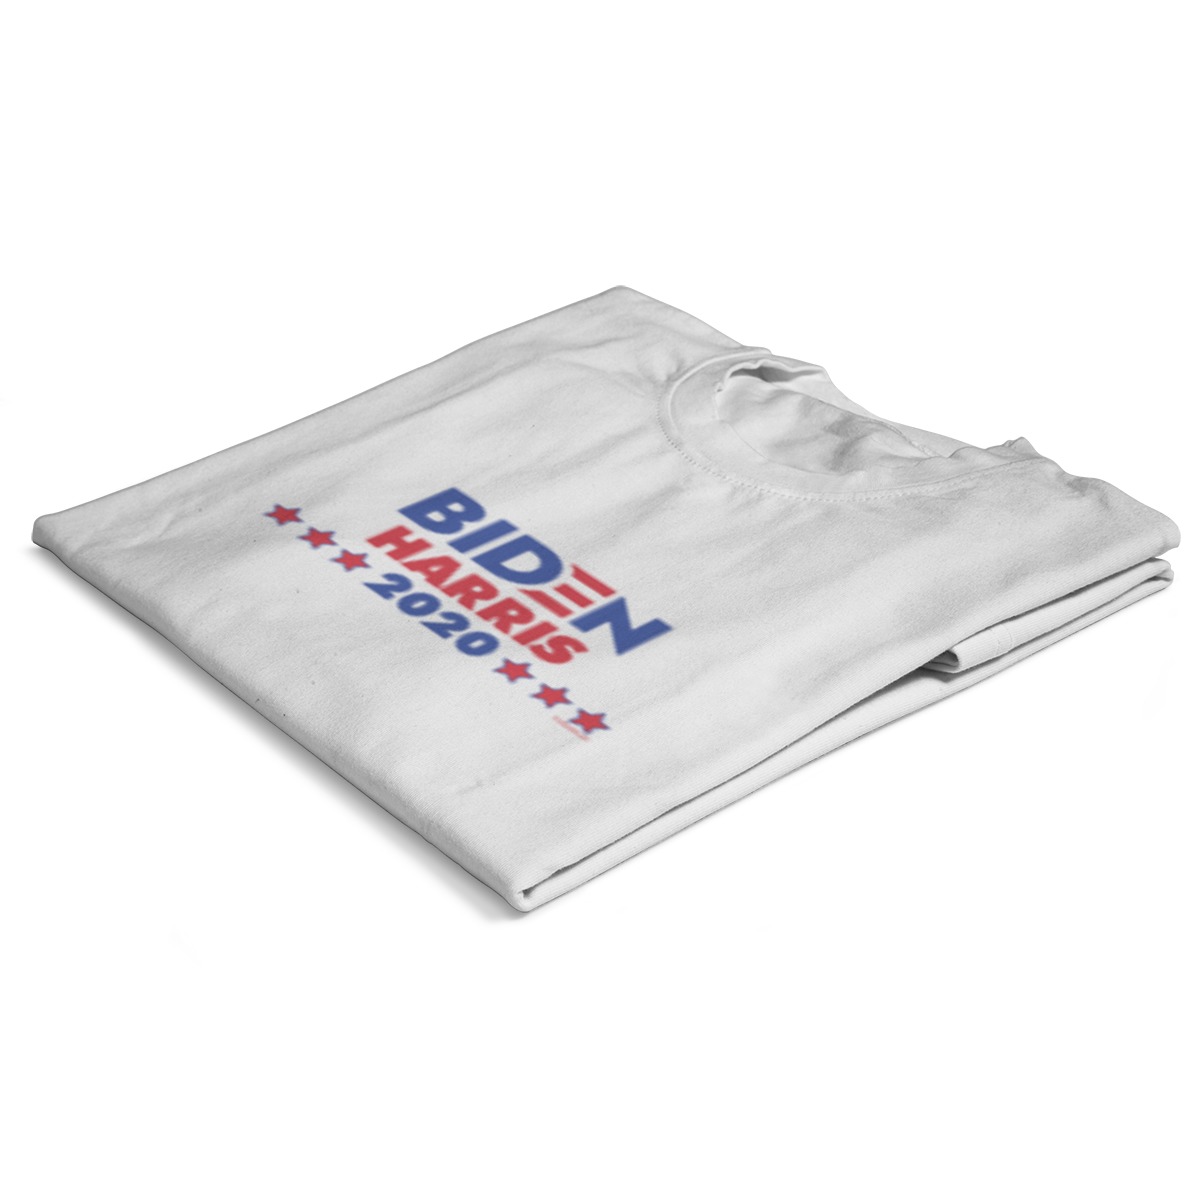 3 Biden Harris Men's T Shirt Novelty Tops Bitumen Bike Life Tees Clothes Cotton Printed T-Shirt Plus Size Tees 3312